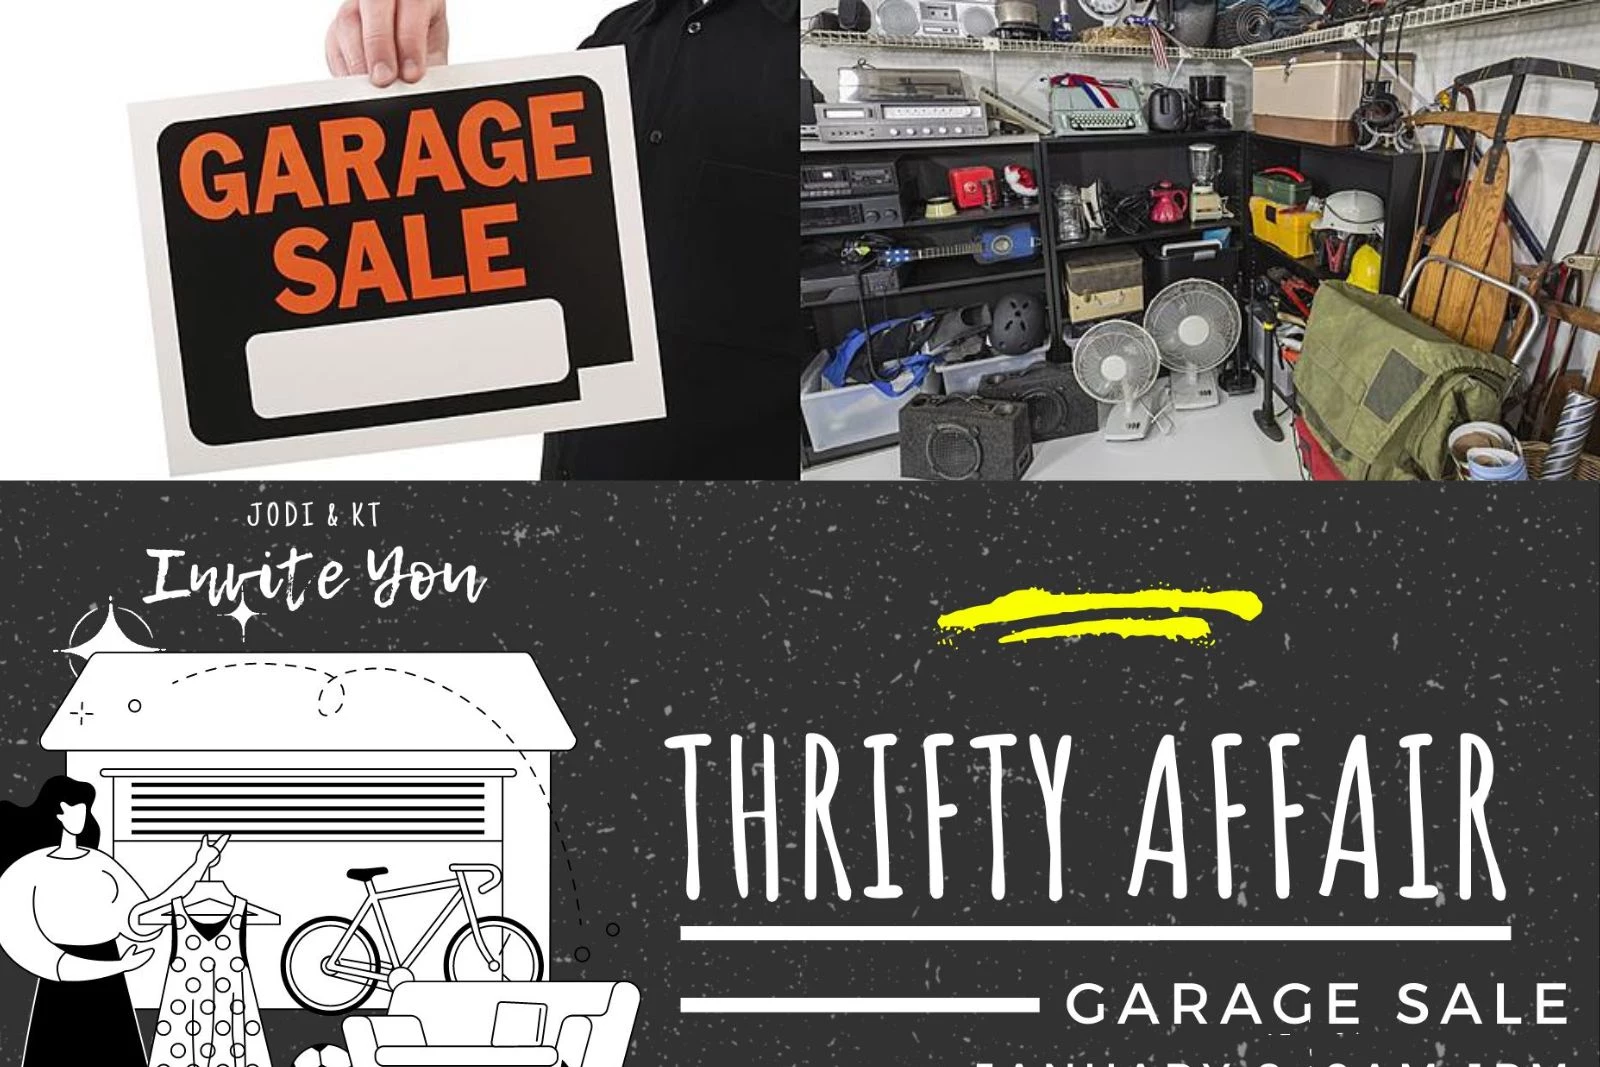 Syracuse Mets host garage sale Friday